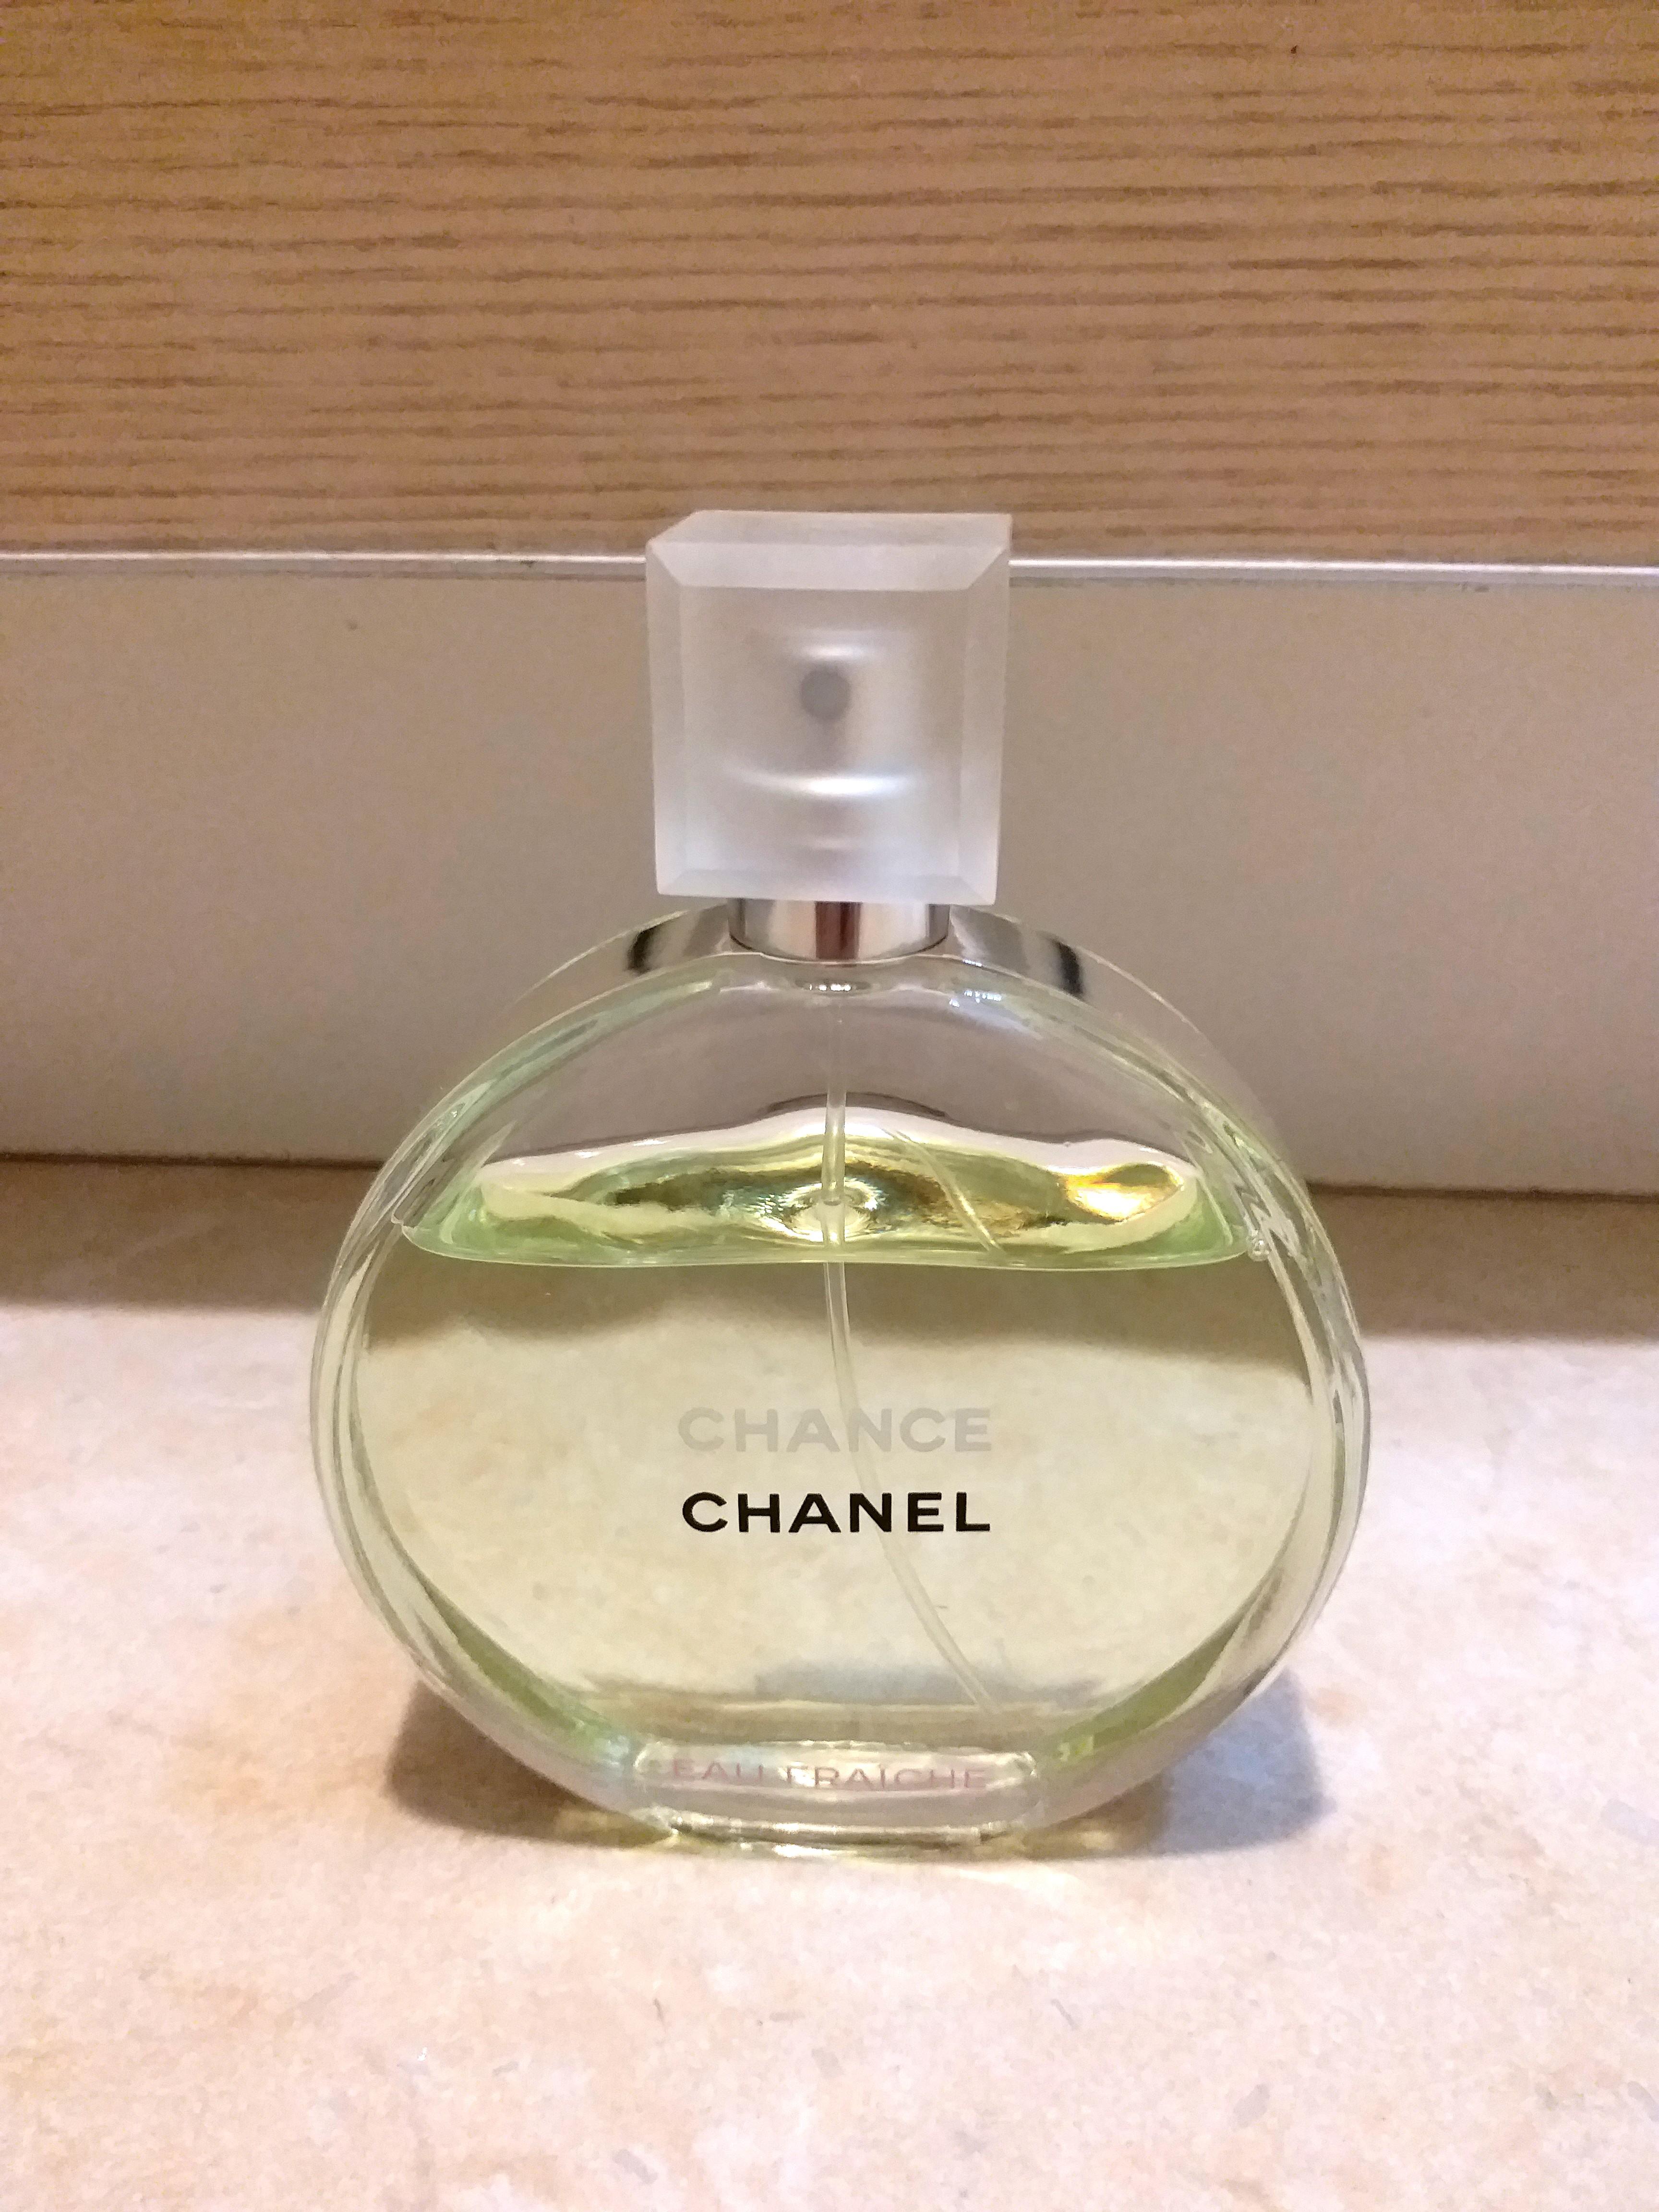 Chanel Chance 100ml Eau Fraiche Eau de Toilette Perfume 香水 edt edp, 美容